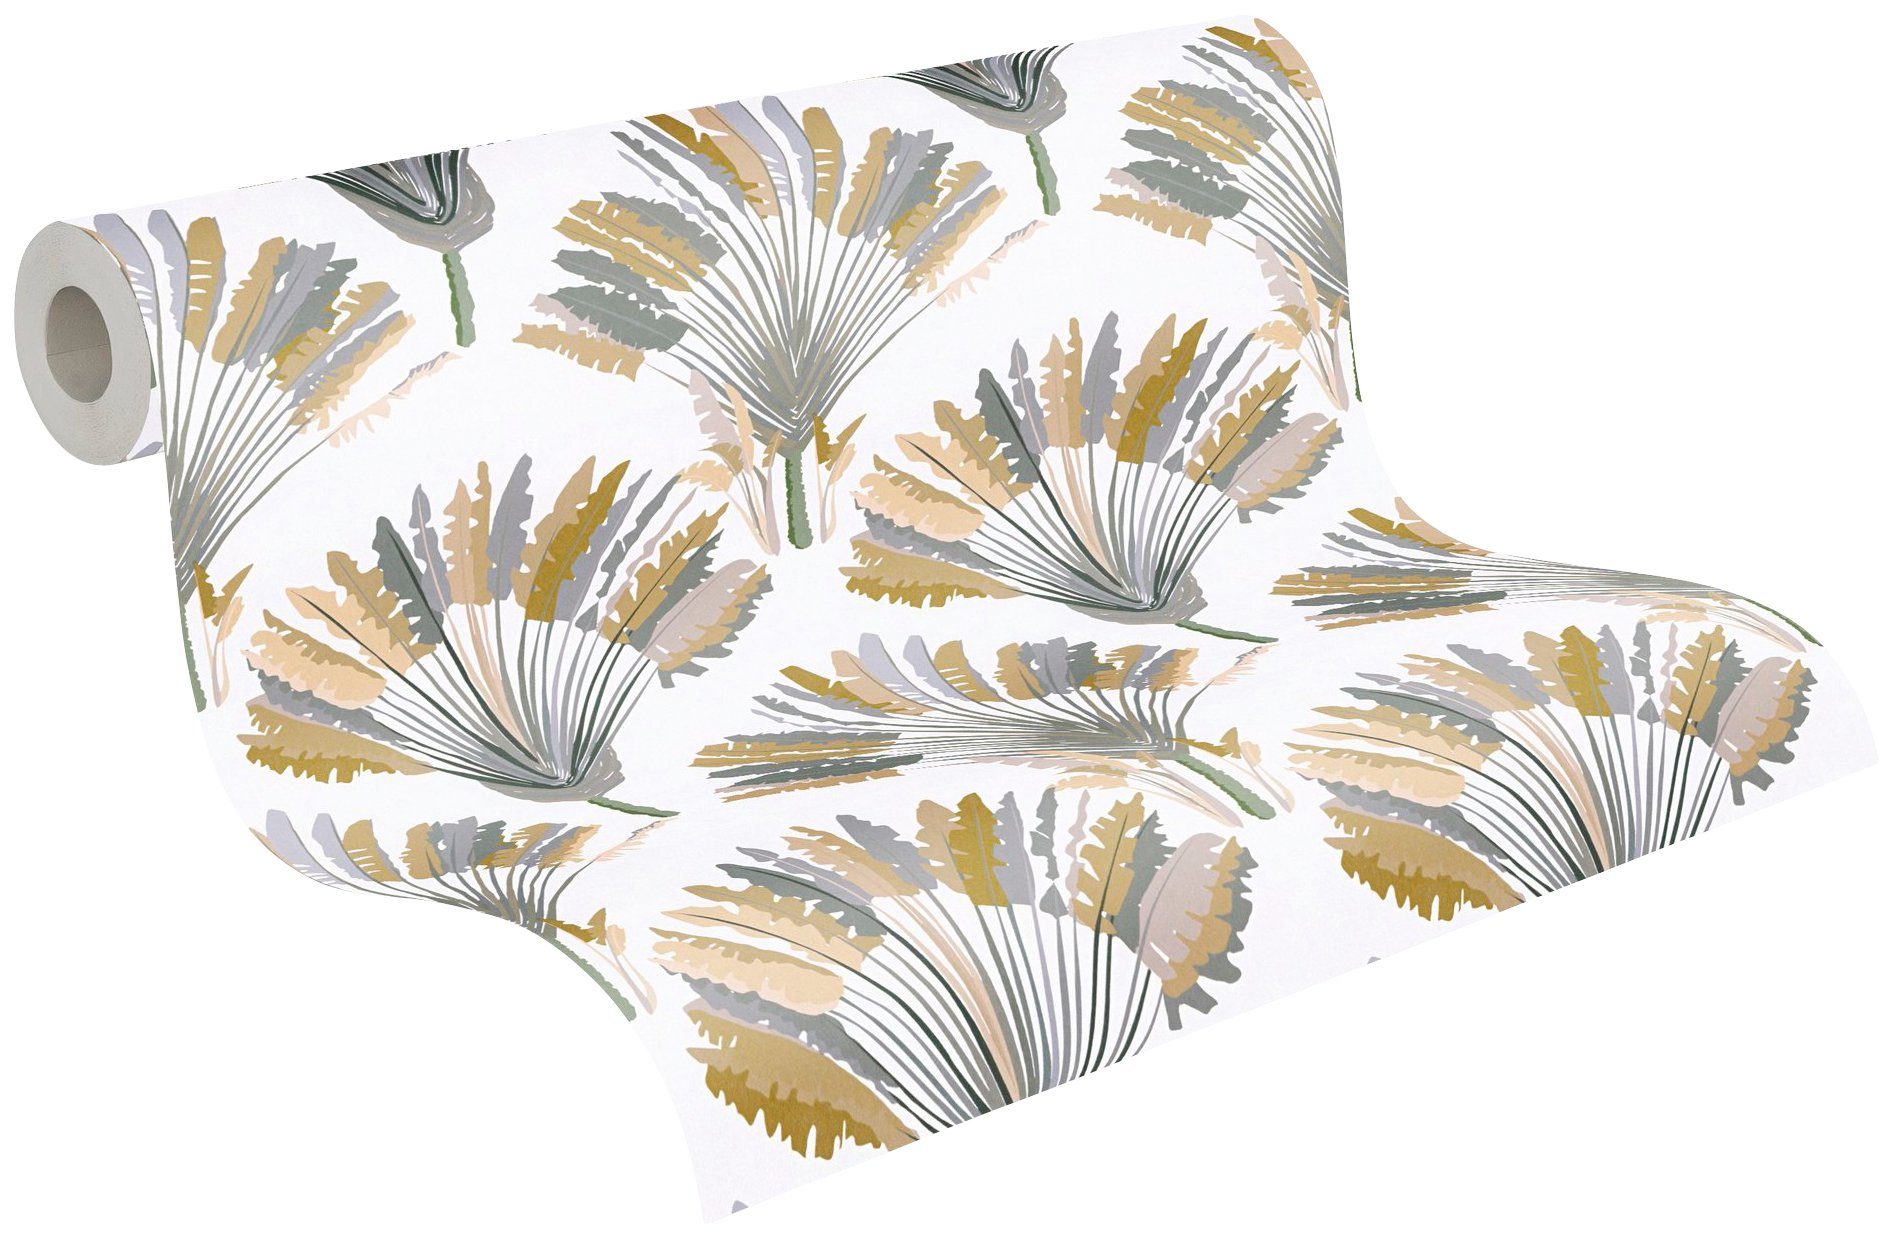 A.S. Création Chic, Vliestapete Architects Palmentapete Jungle glatt, Federn gelb/grau/weiß tropisch, Dschungel Tapete botanisch, Paper floral